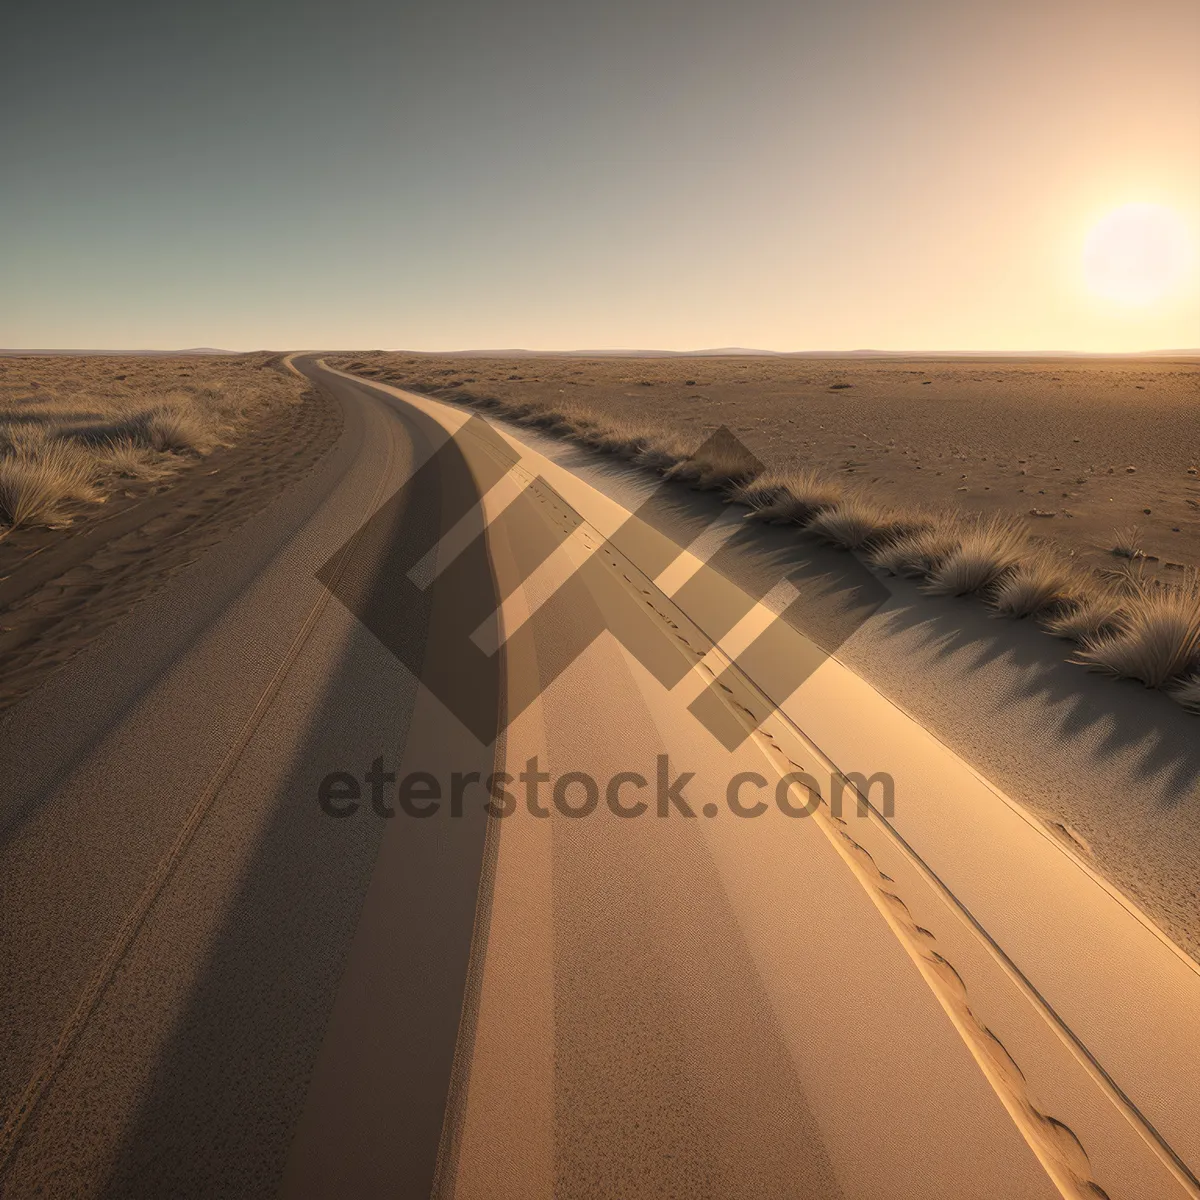 Picture of Scenic Desert Drive on Asphalt Highway under Cloud-Filled Sky